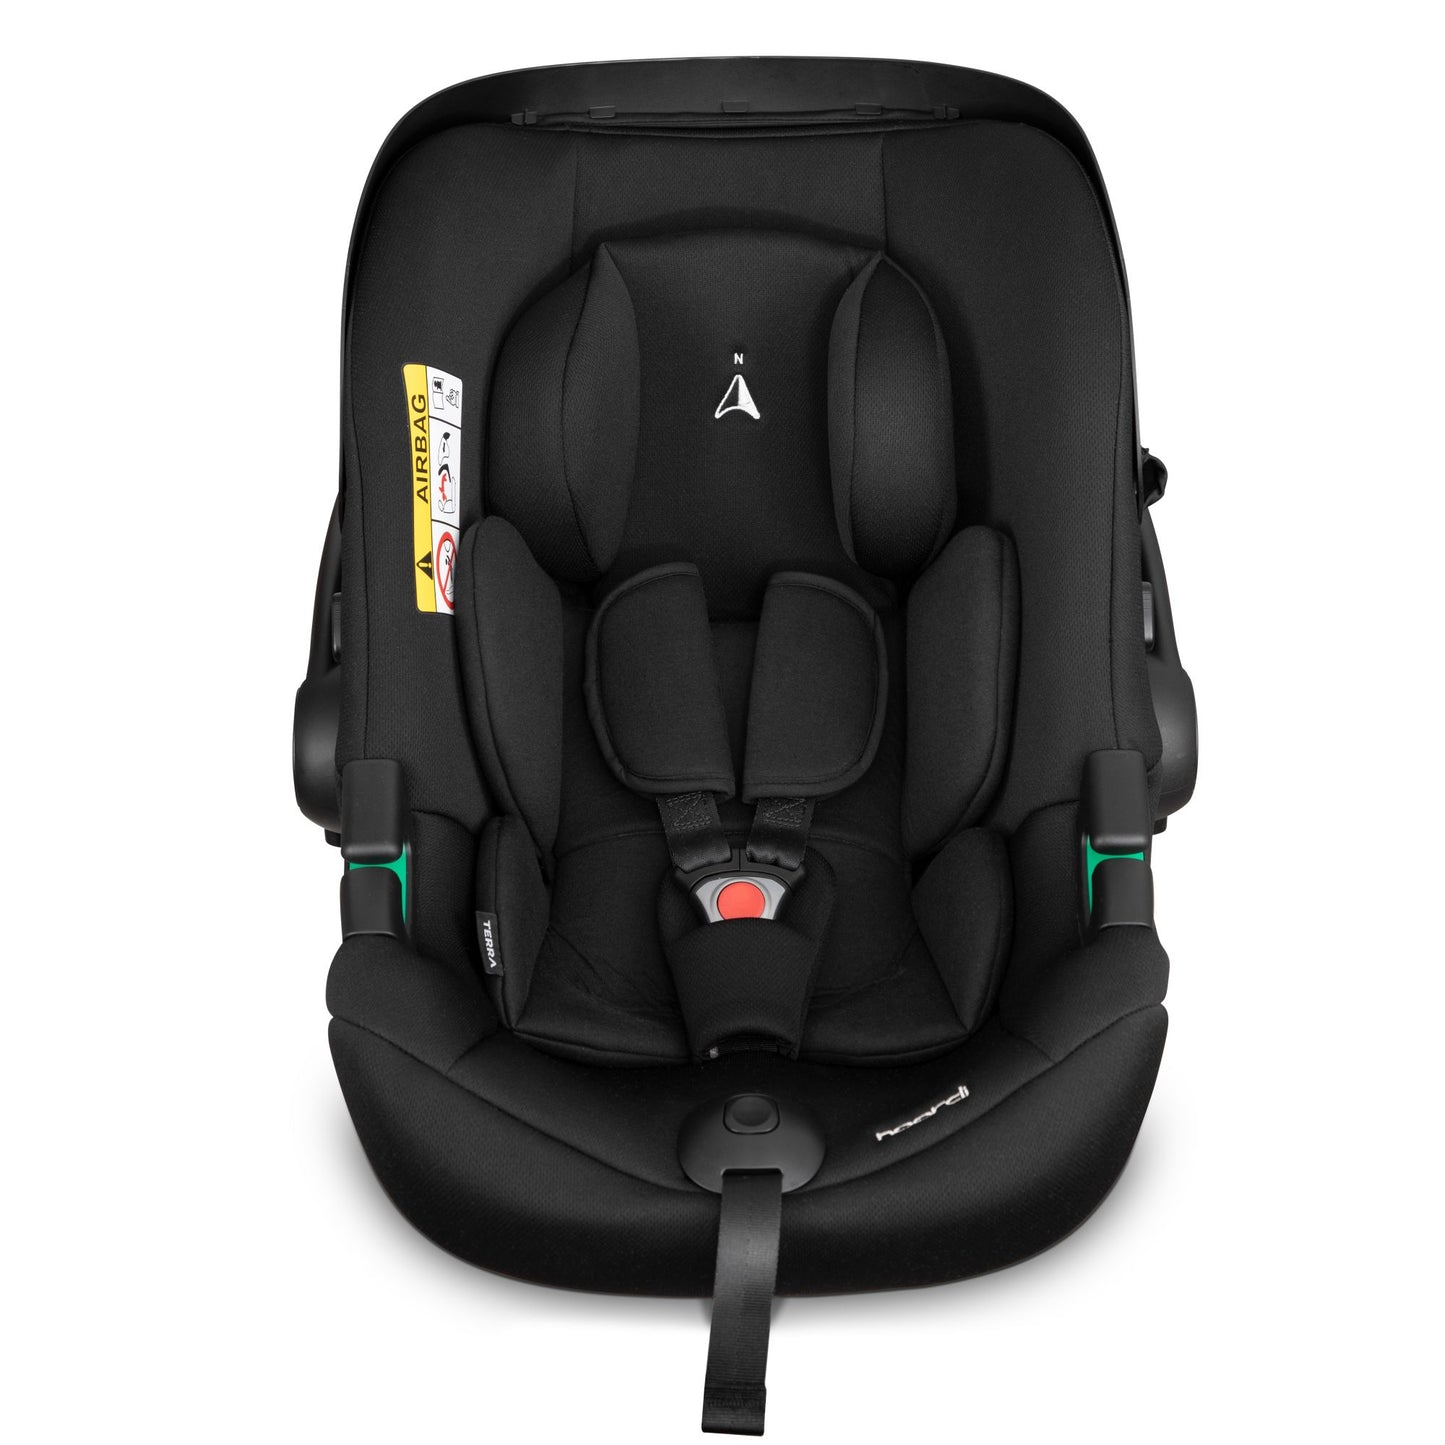 Noordi Terra, iSize 40-87cm, 0-18 months Baby Car Seat